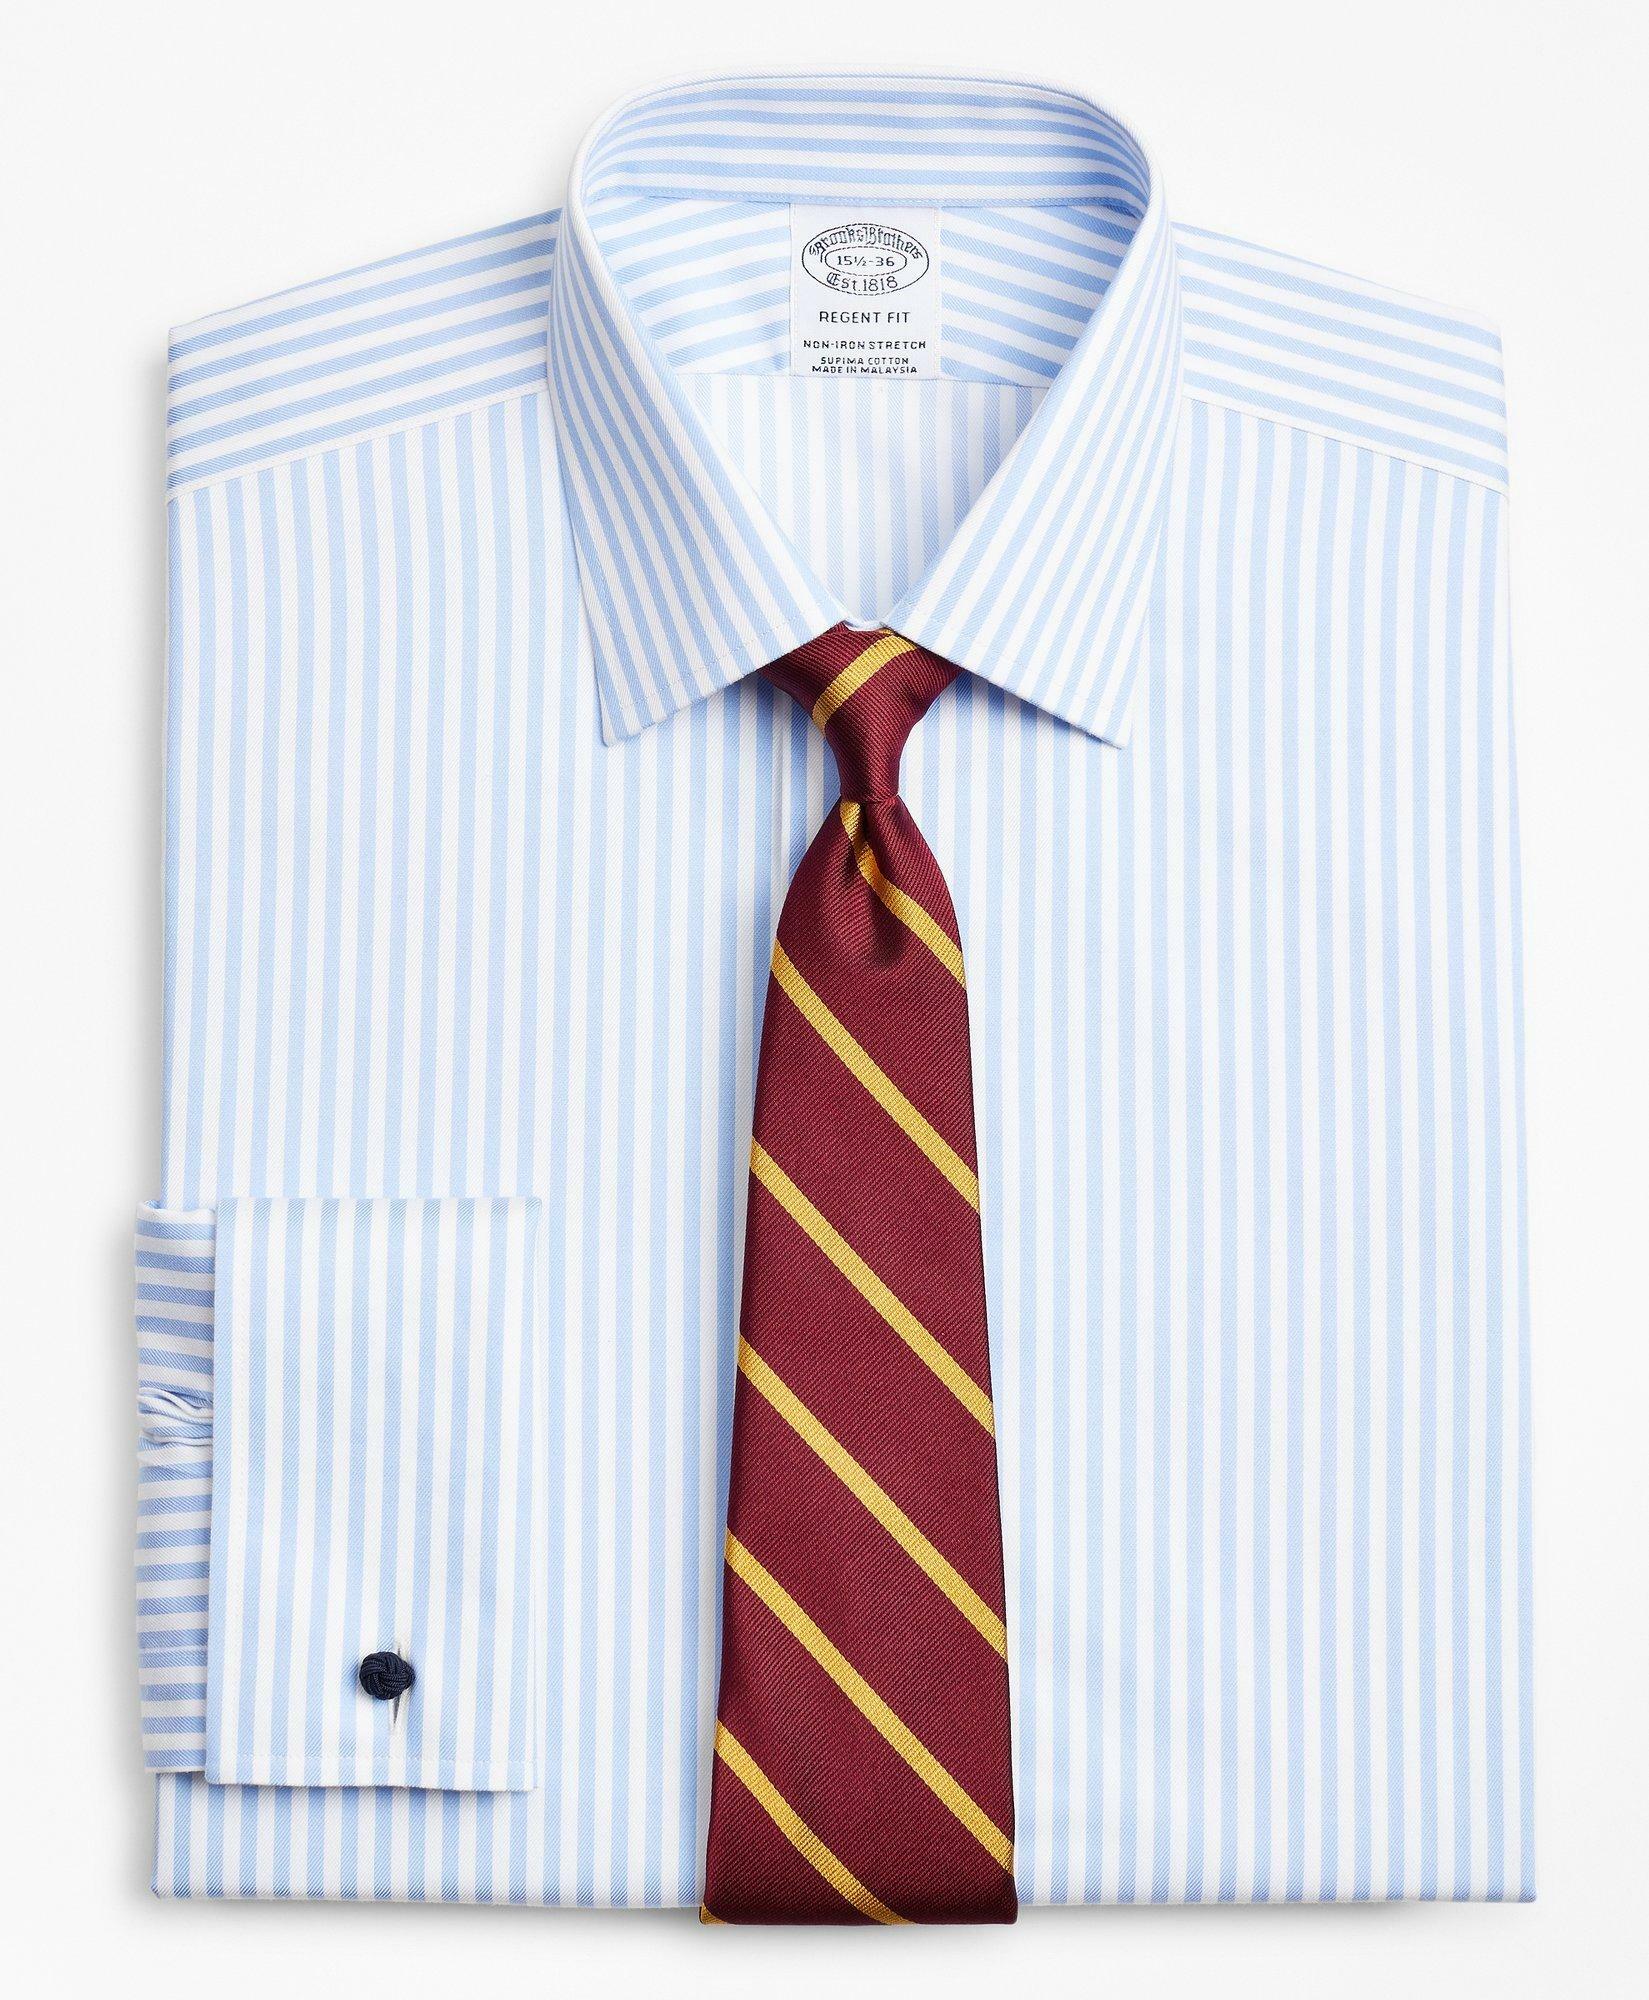 Brooks Brothers Men's Stretch Regent Regular-Fit Dress Shirt, Non-Iron Twill Ainsley Collar French Cuff Bold Stripe | Light Blue